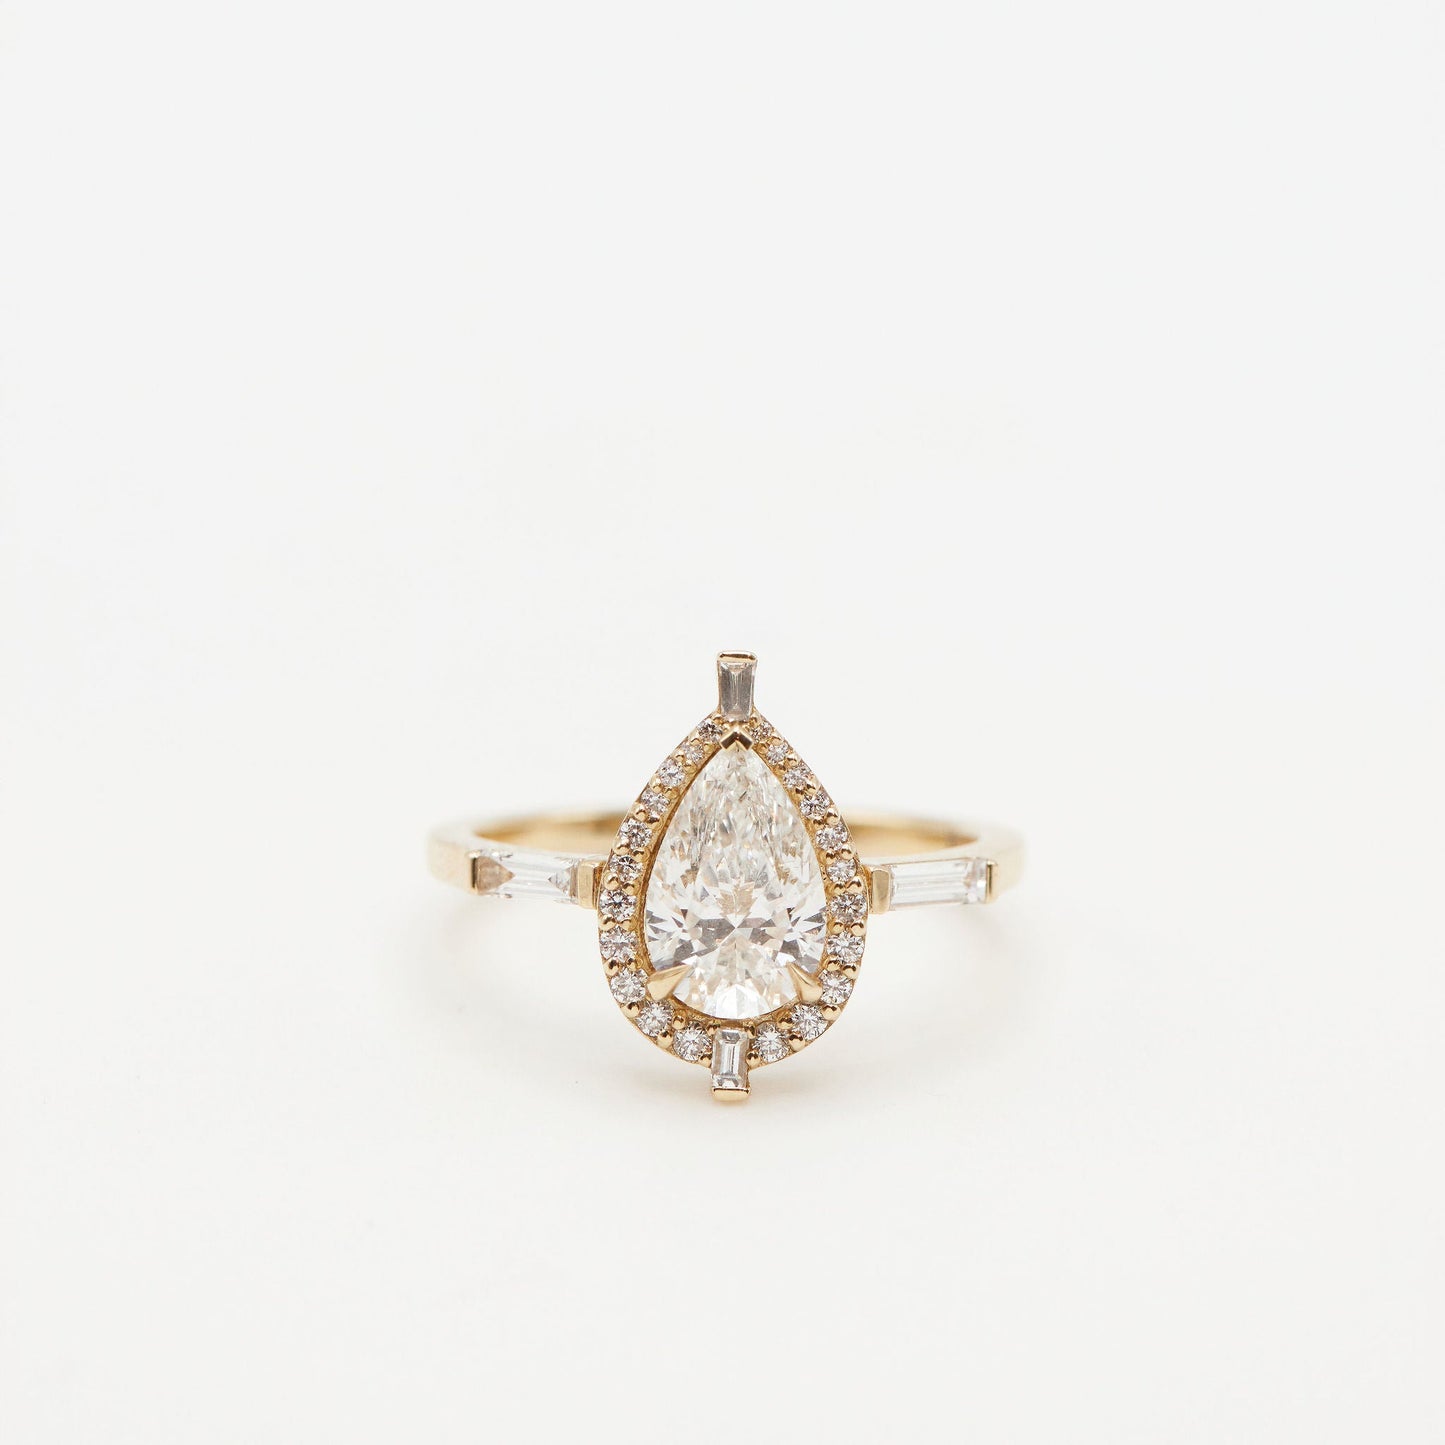 Diamond Marchesa ring on white background